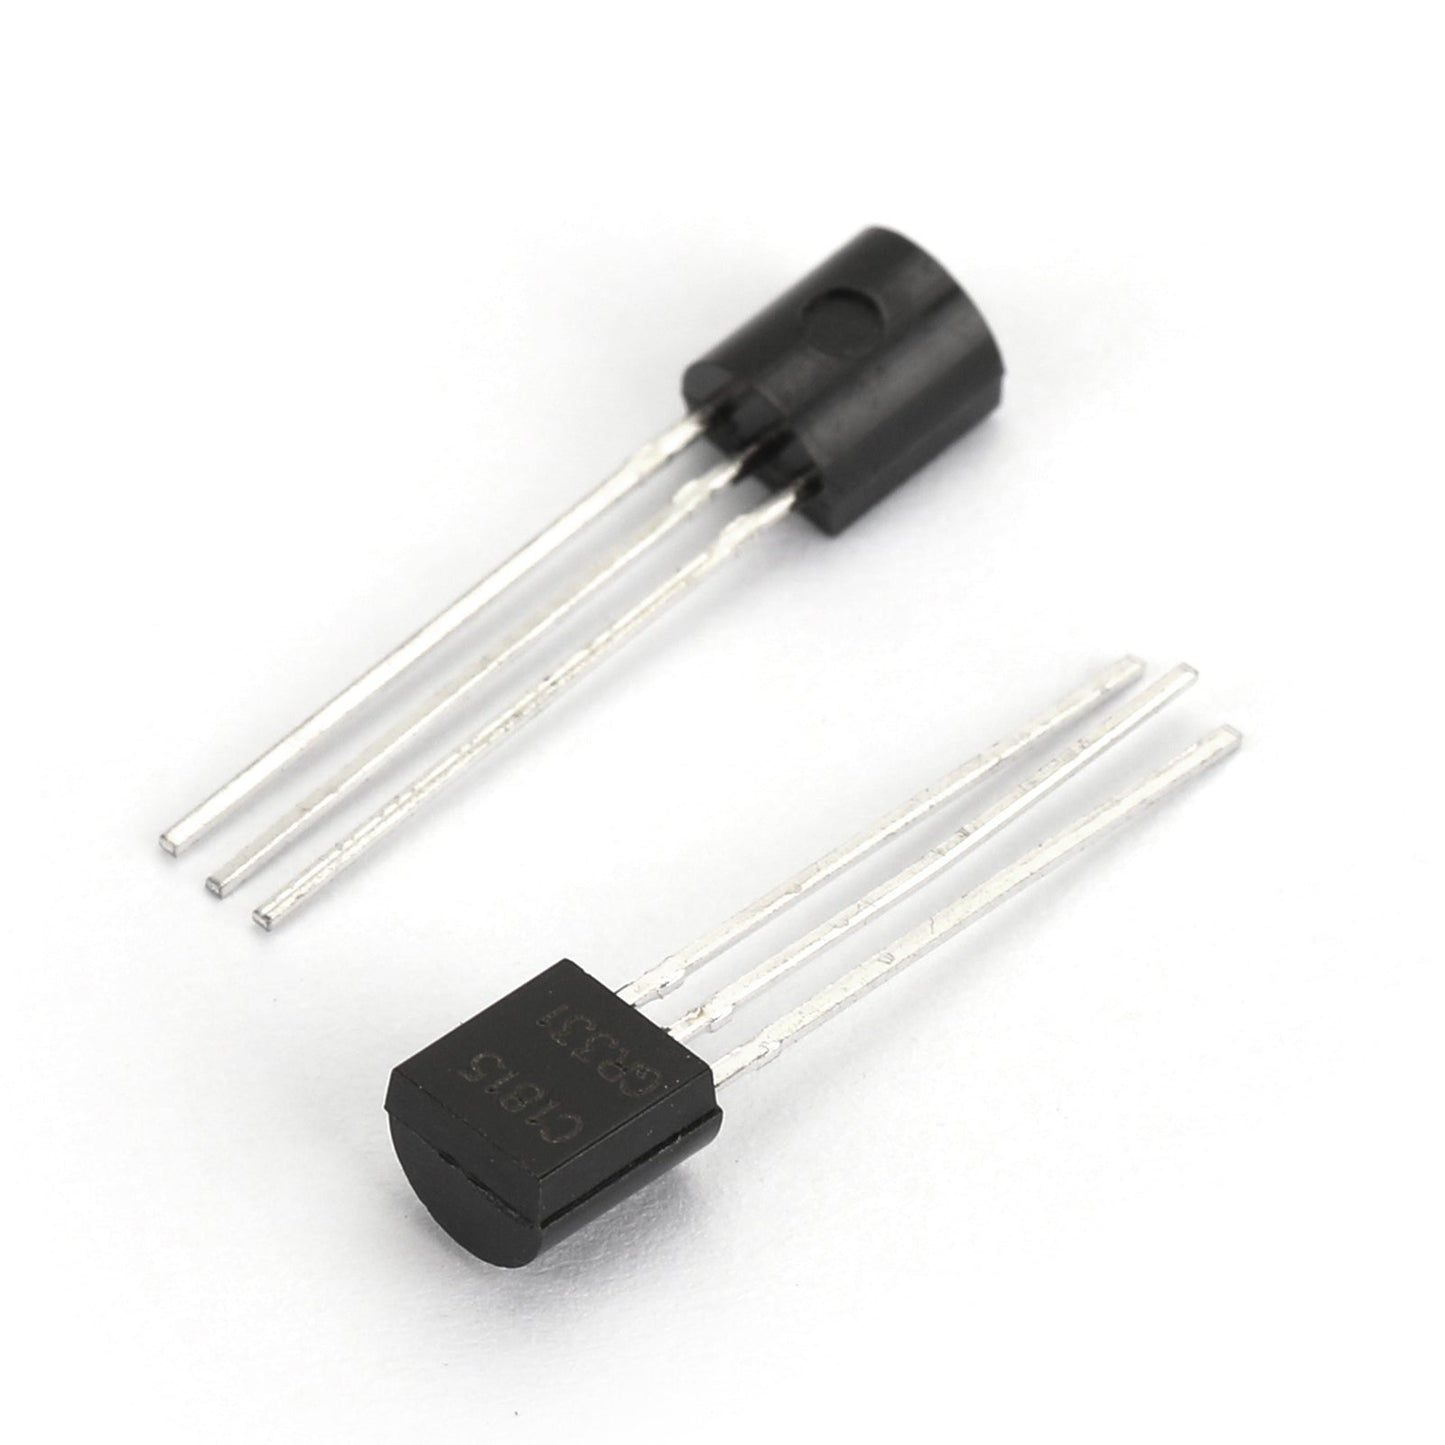 24 Value 840pcs Transistor TO-92 Assortment NPN PNP DIY kit 2N2222-S9018 / BC327